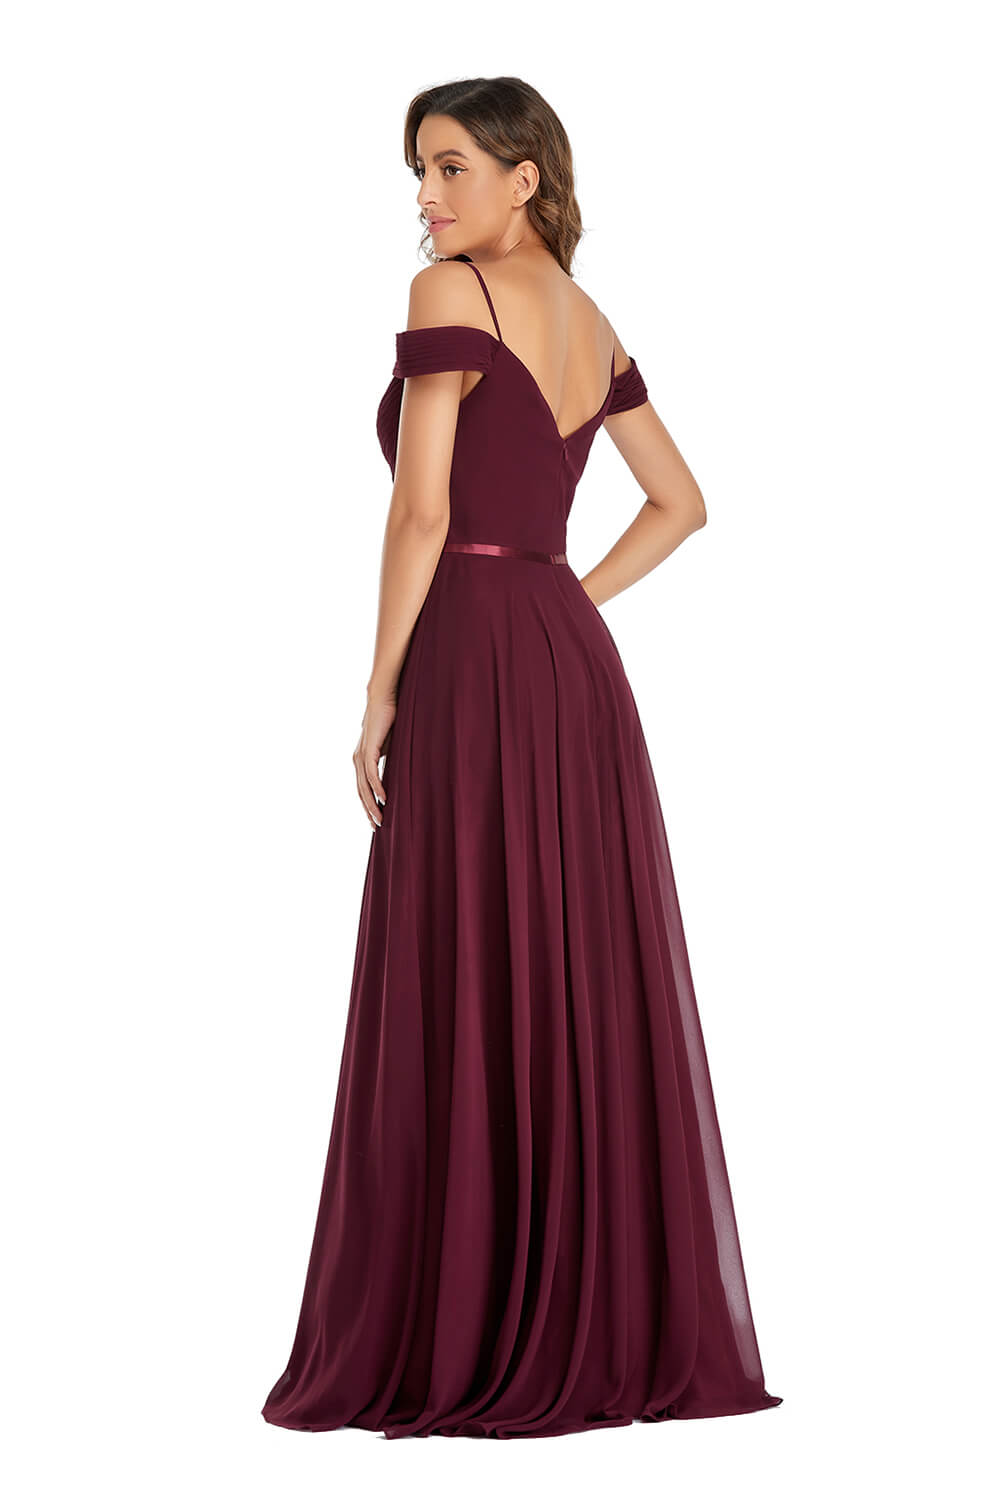 Hebochic Burgundy Off the Shoulder Long Length Evening Dress Women Formal Prom Dress